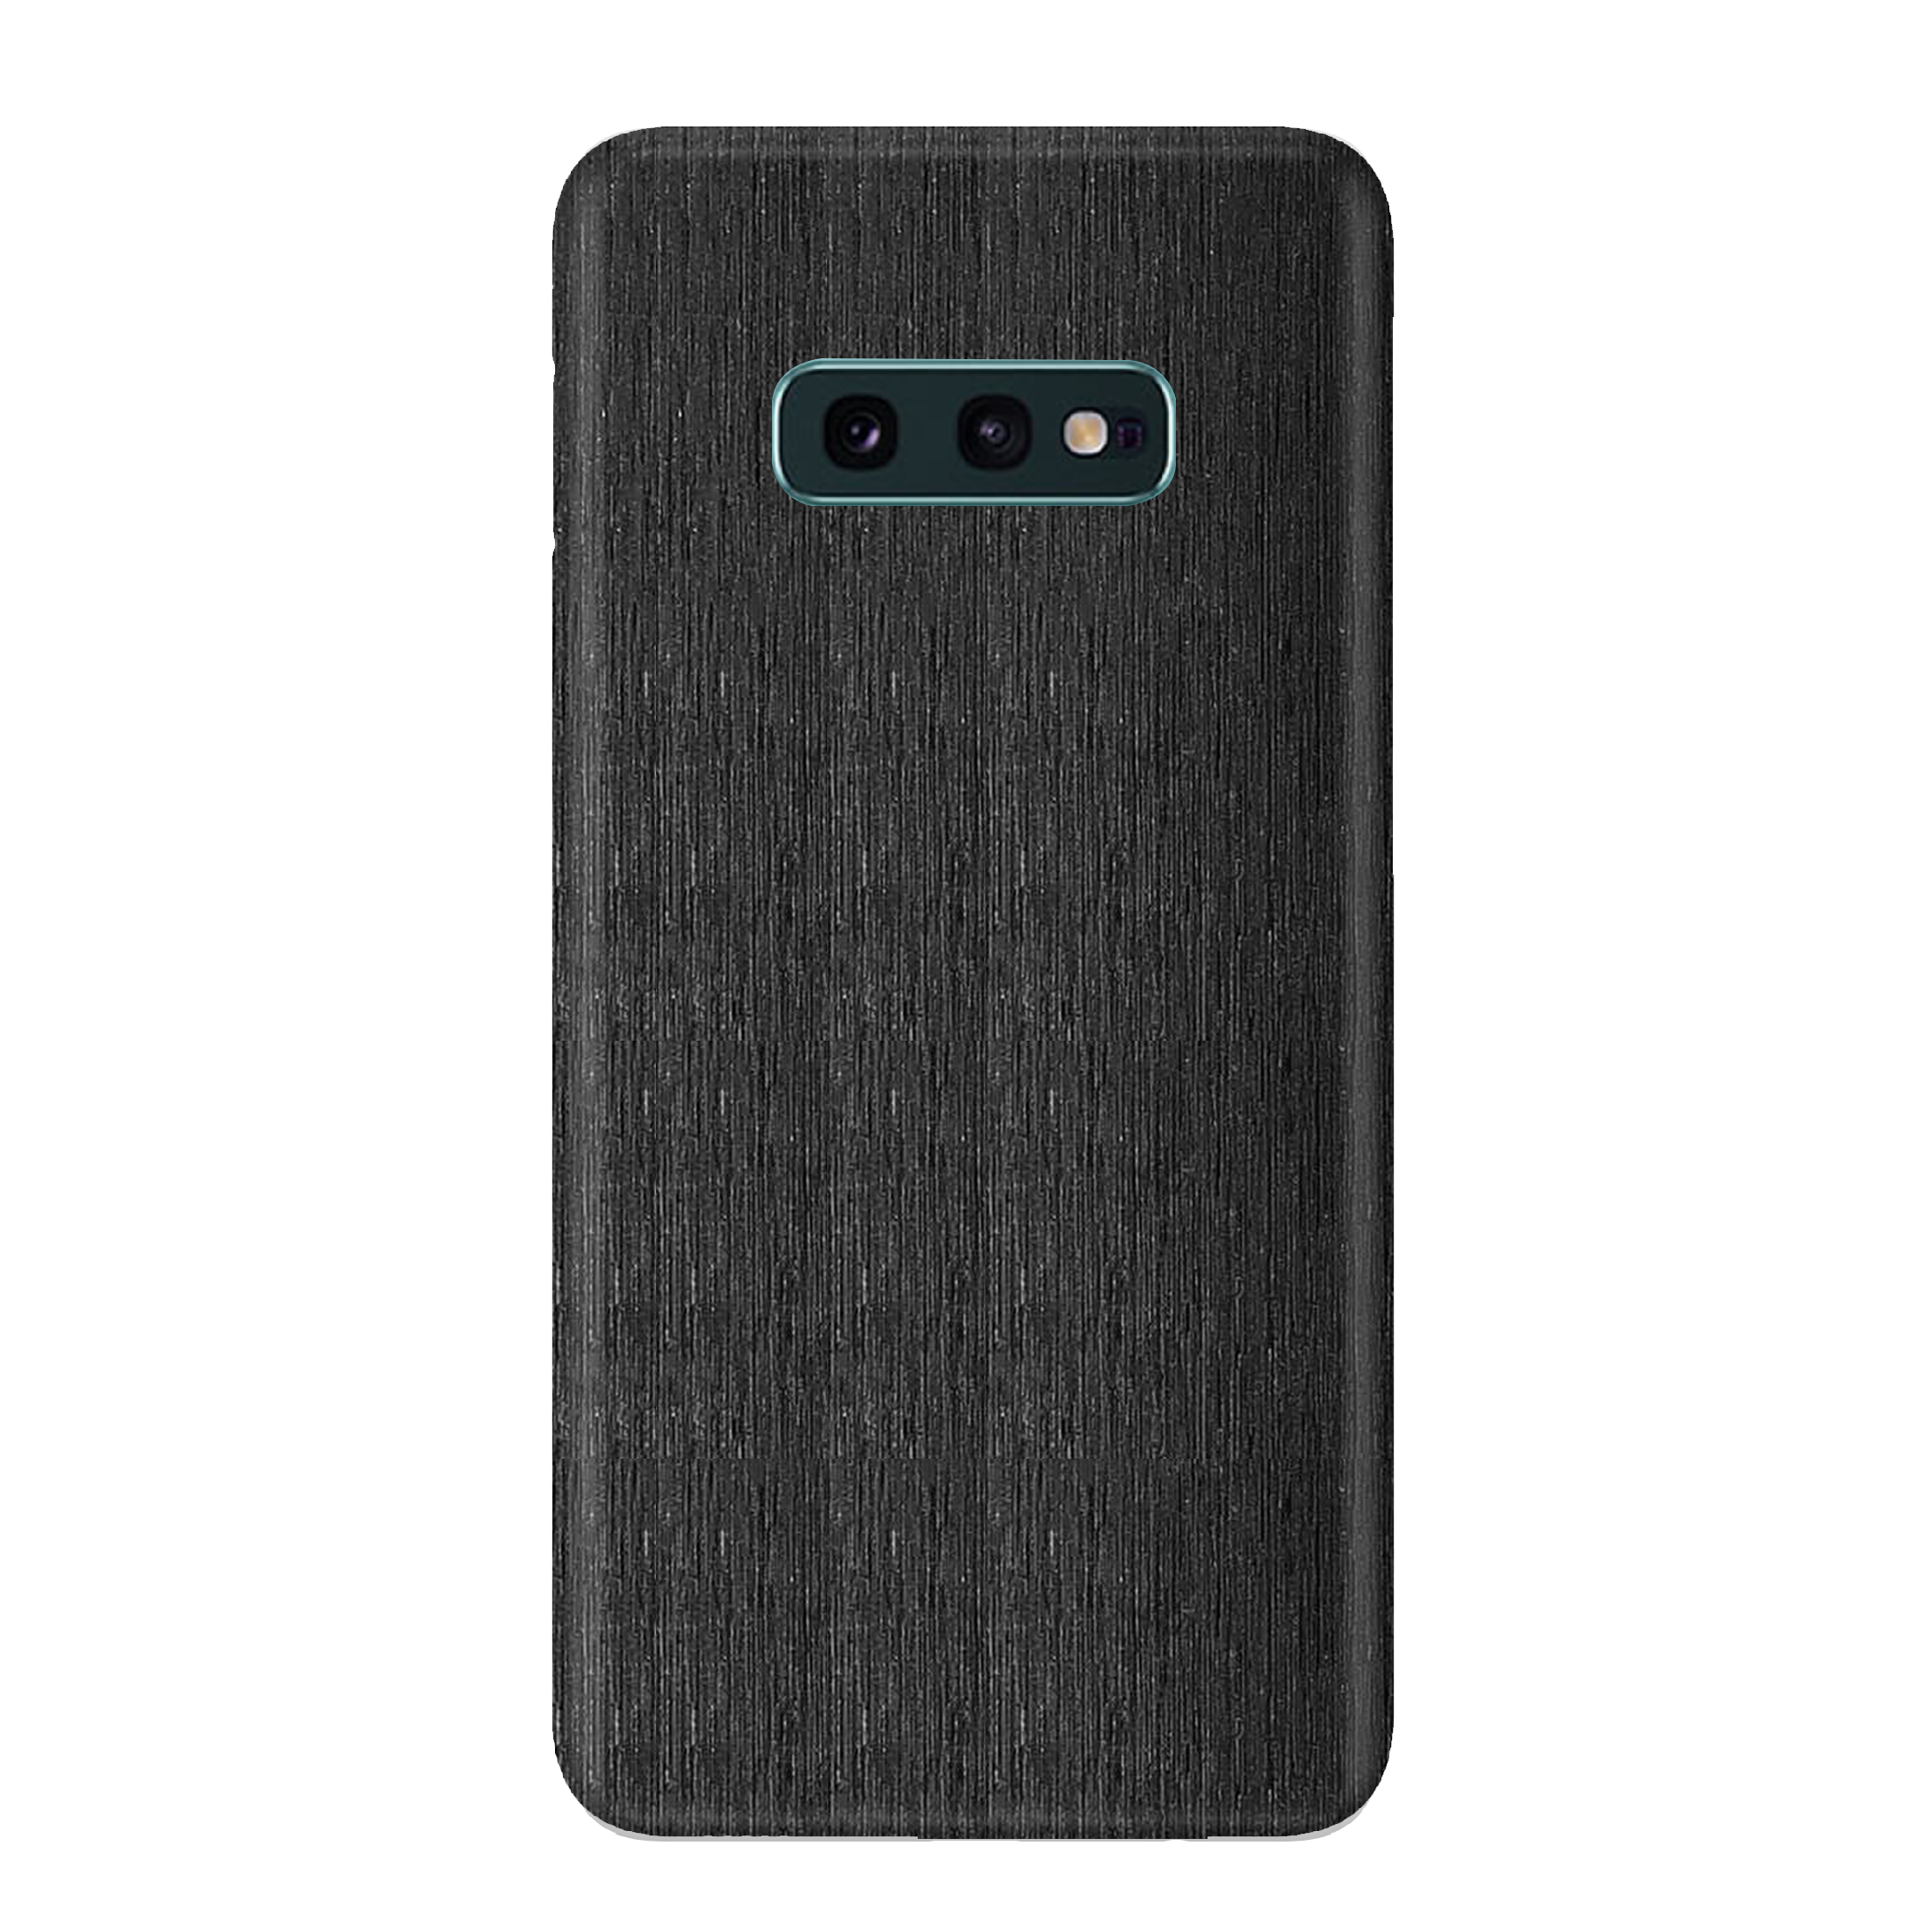 Brushed Black Metallic Skin for Samsung S10E